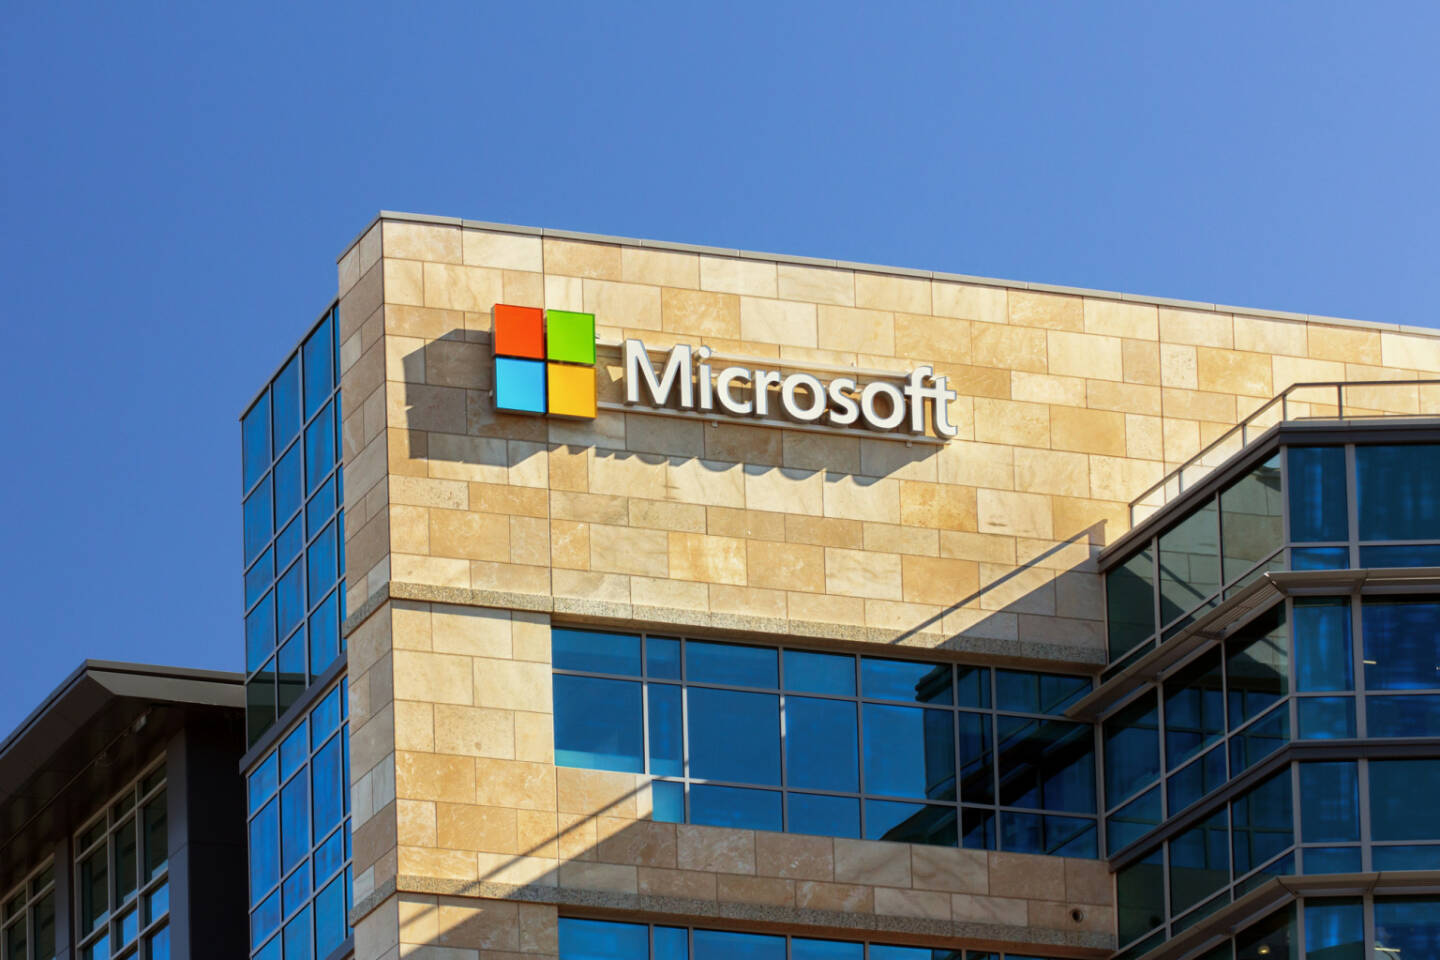 Microsoft corporate, Santa Clara, California - https://de.depositphotos.com/40325161/stock-photo-microsoft-building.html